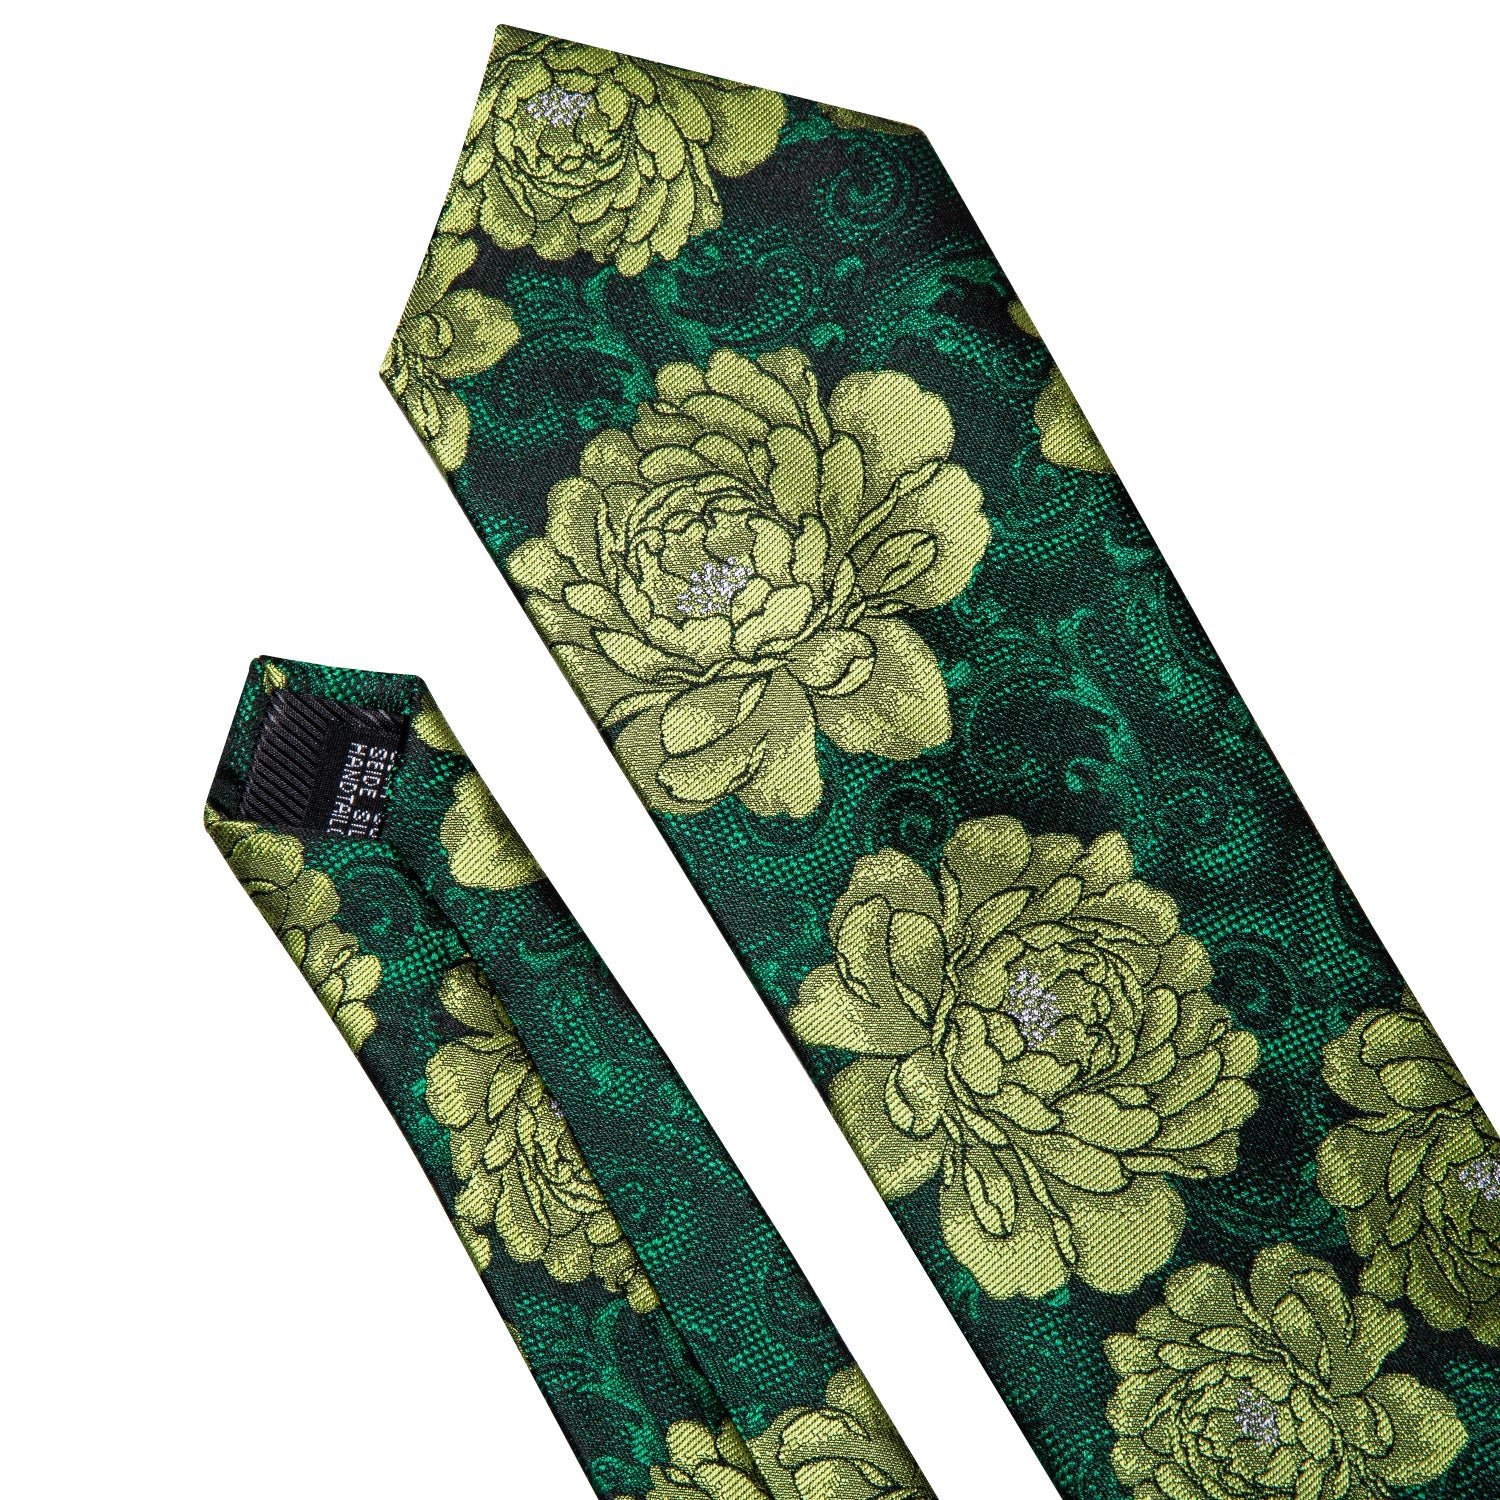 Barry.wang Green Tie Jacquard Floral Men's Silk Tie Hanky Cufflinks Set